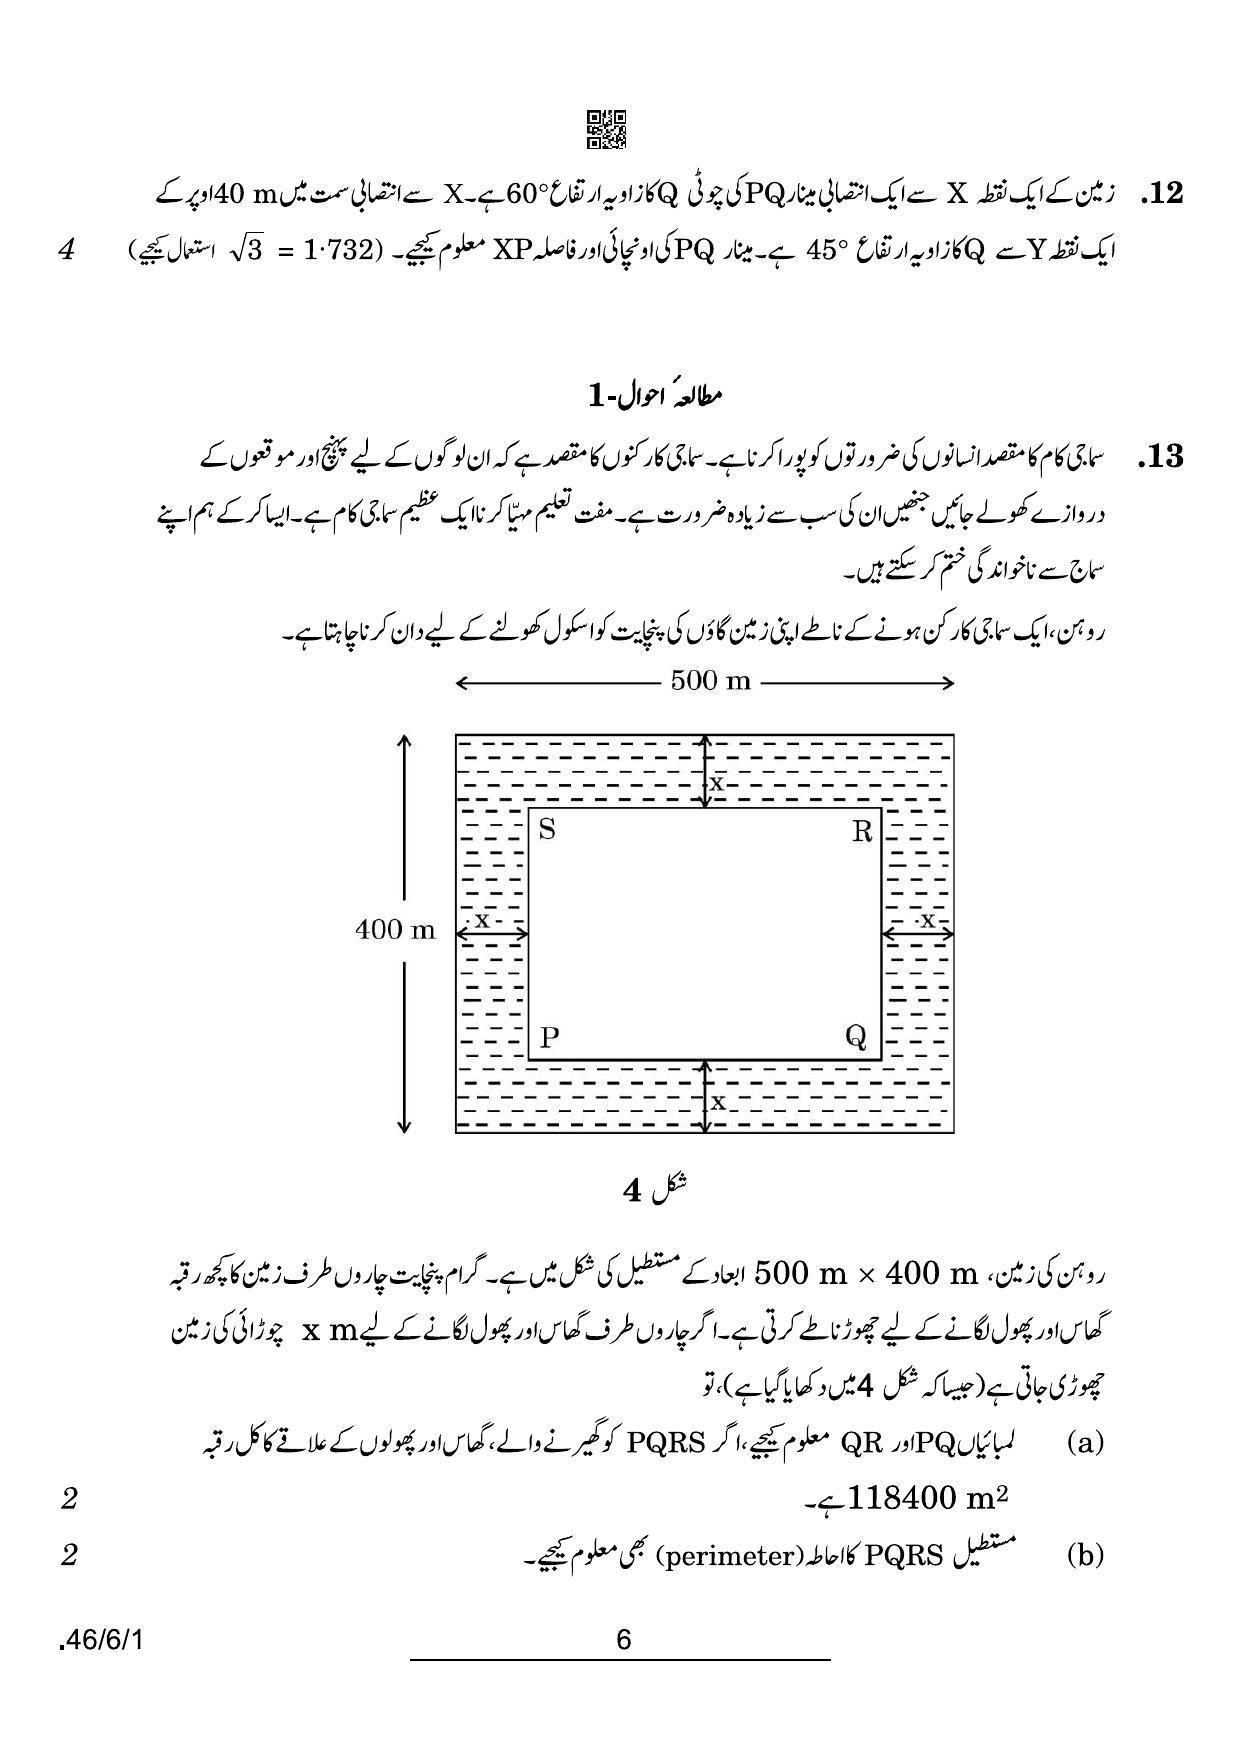 CBSE Class 10 46-6-1 Maths Standard Urdu 2022 Compartment Question Paper - Page 6